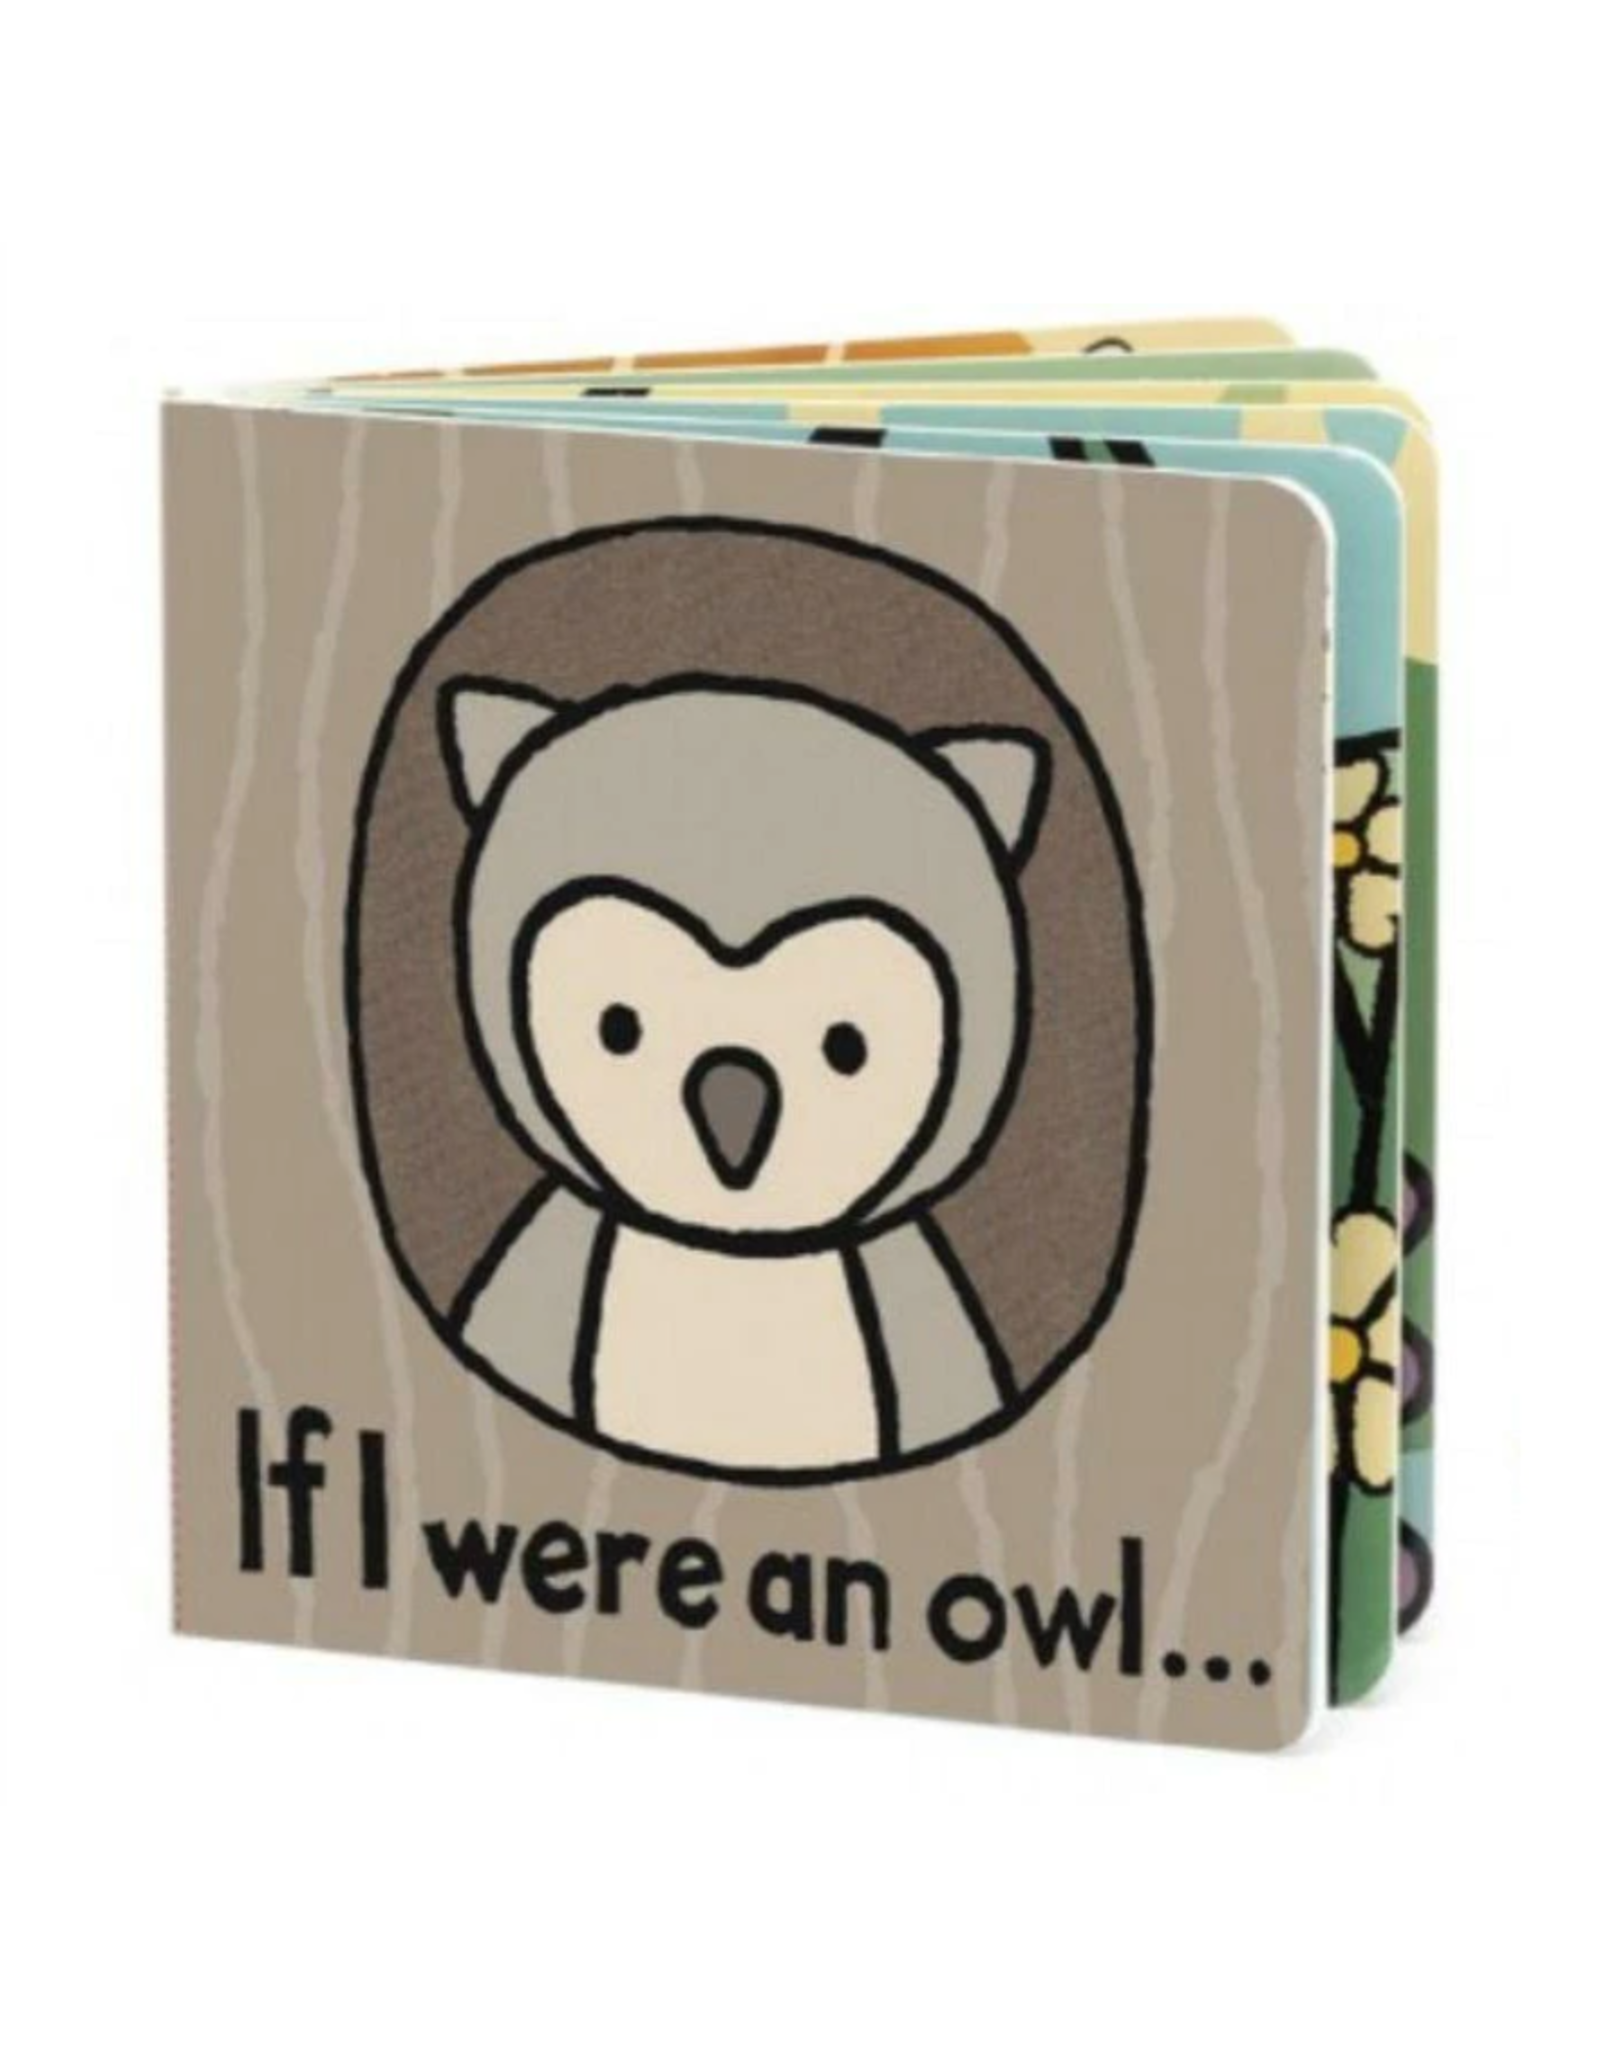 Jellycat Book, If I Were An Owl